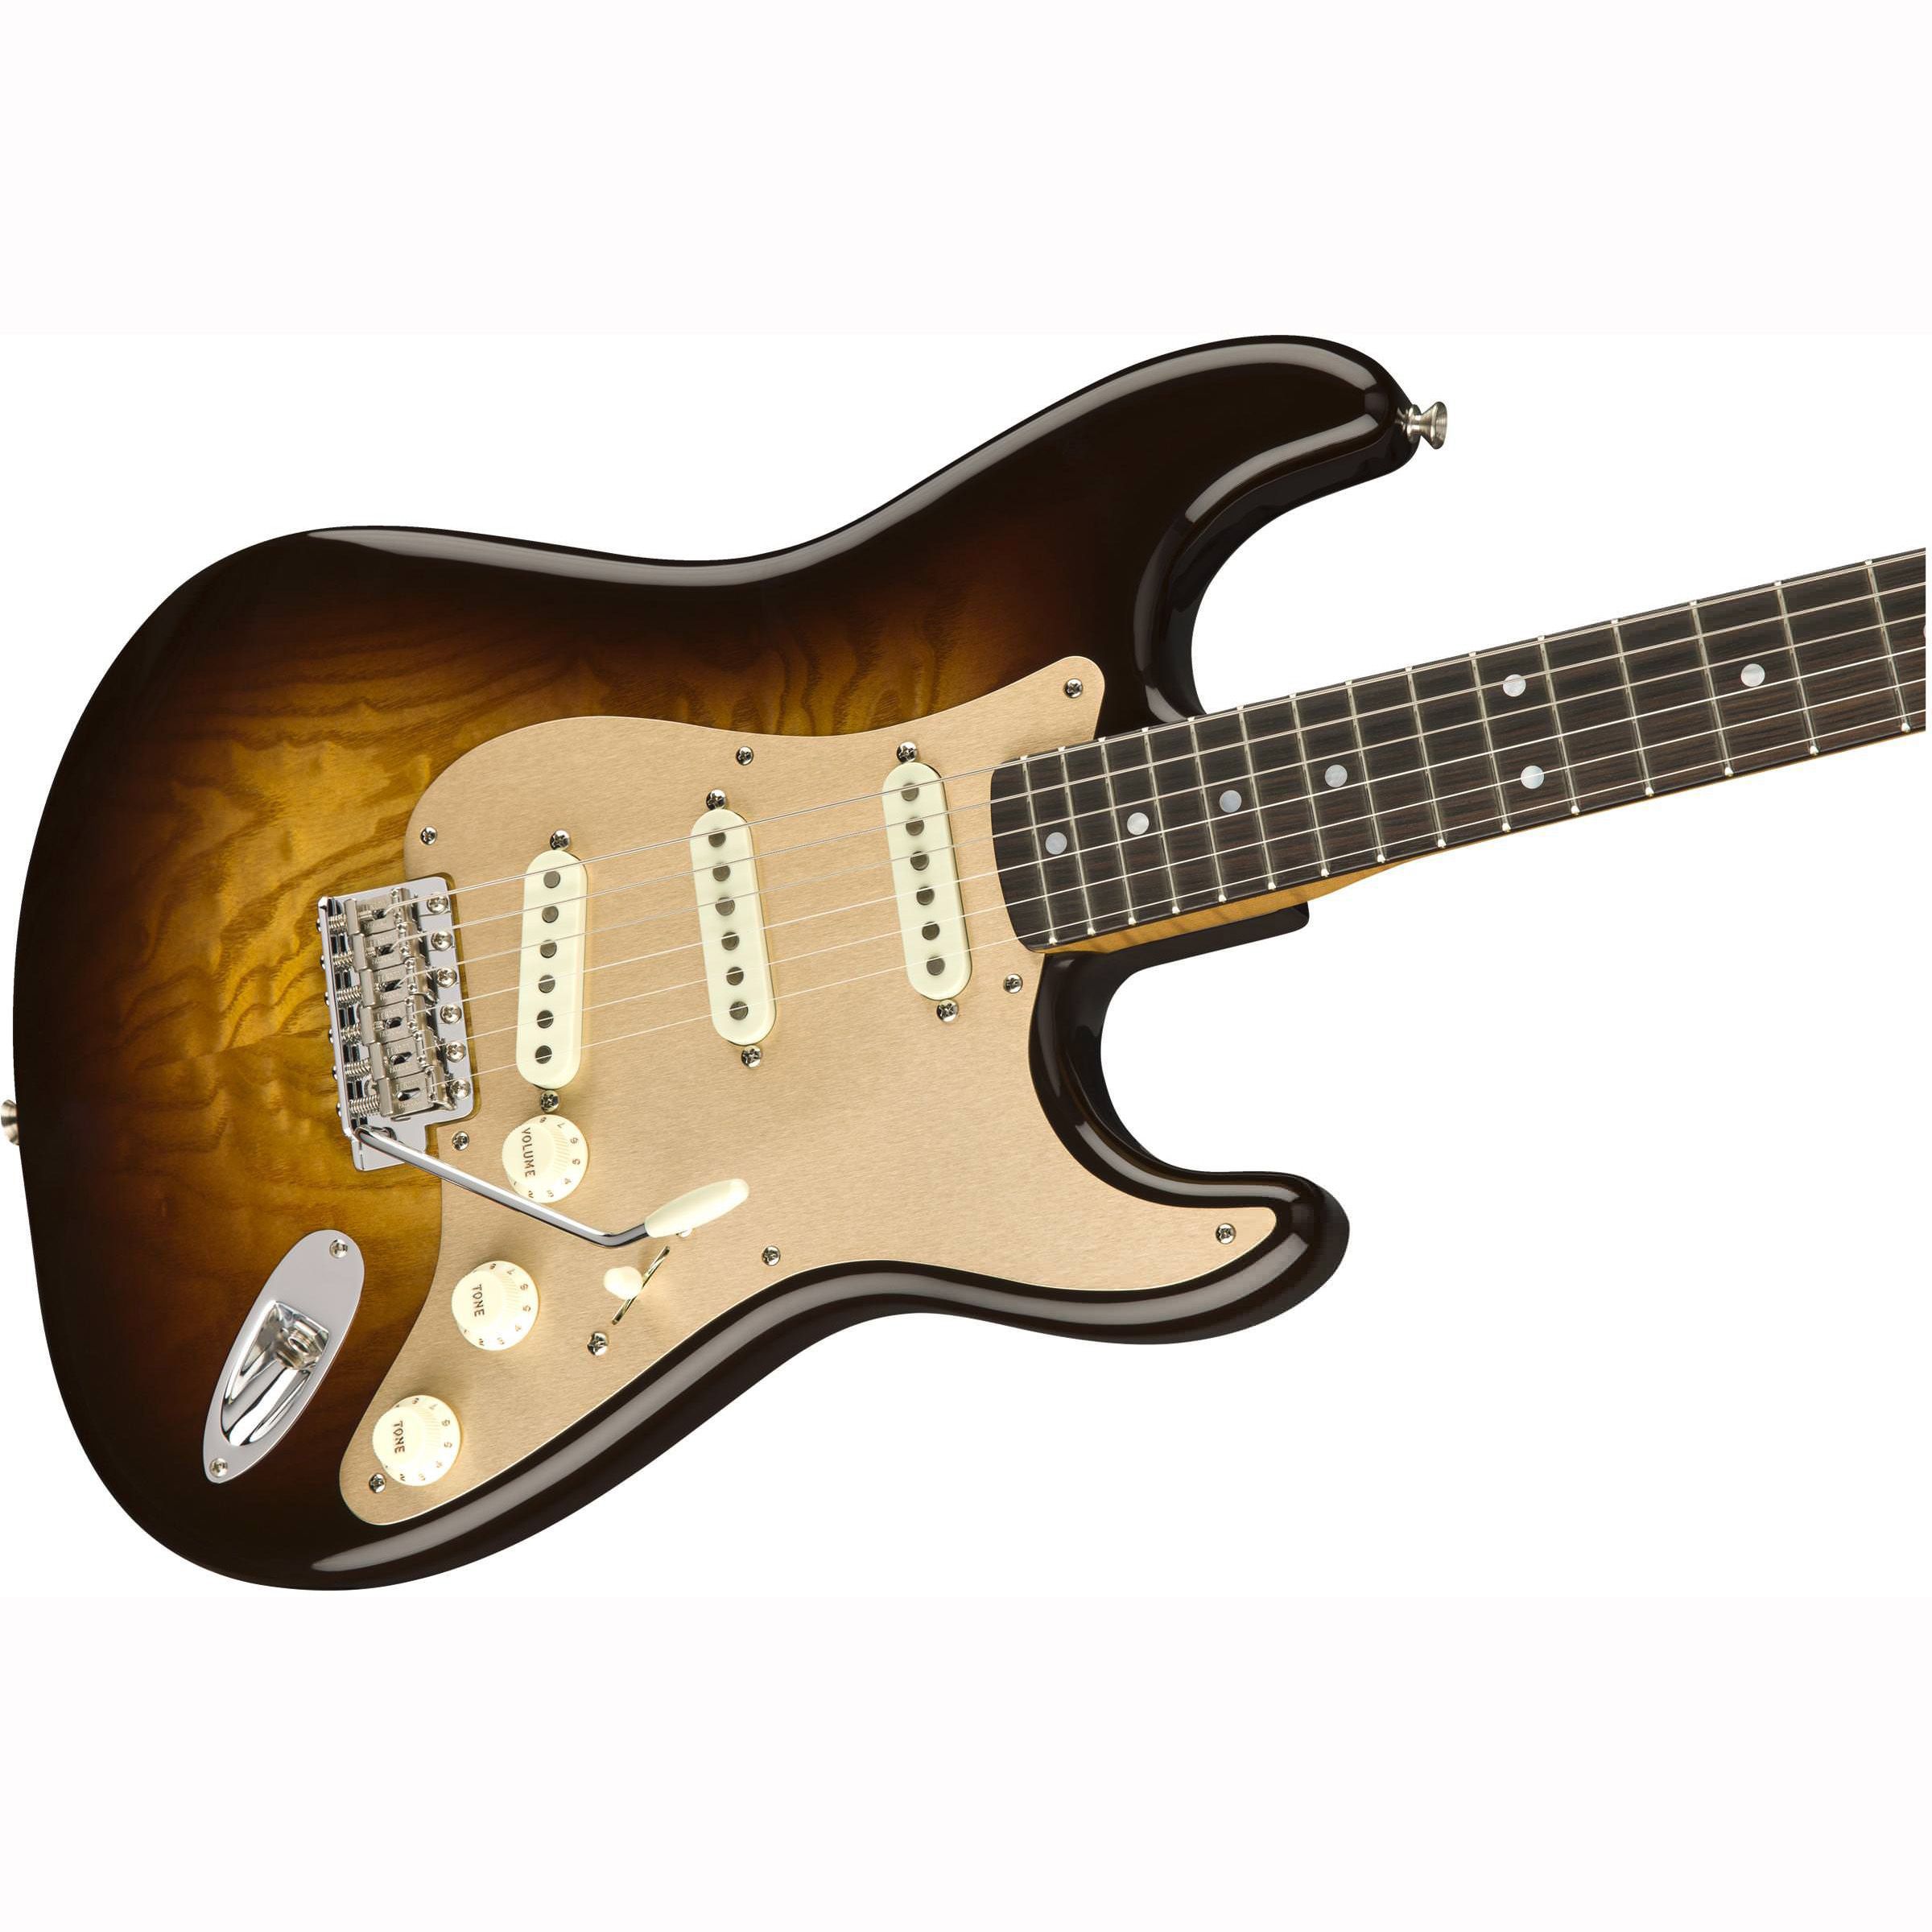 Электрогитара hss. Электрогитара Fender American professional Stratocaster HSS Shawbucker. Электрогитара Fender '60 Stratocaster. Электрогитара Fender American Deluxe Strat Ash. Электрогитара Fender American Deluxe Strat HSS.